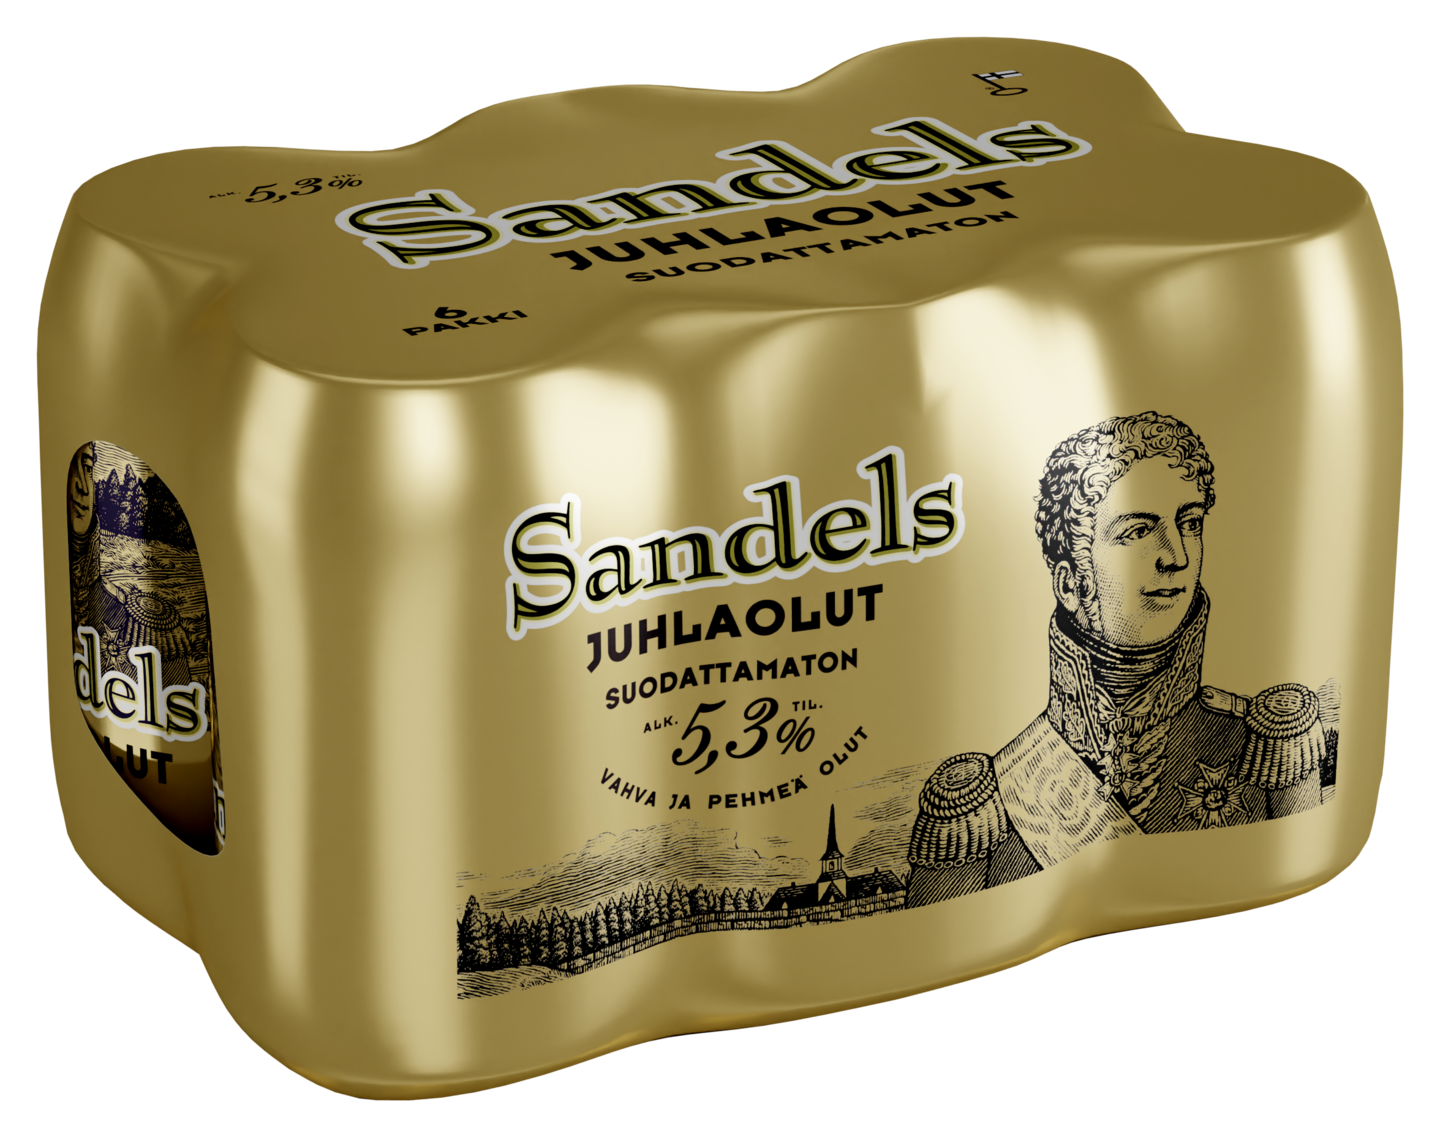 Sandels Juhlaolut suodattamaton 5,3% 0,33l 6-pack